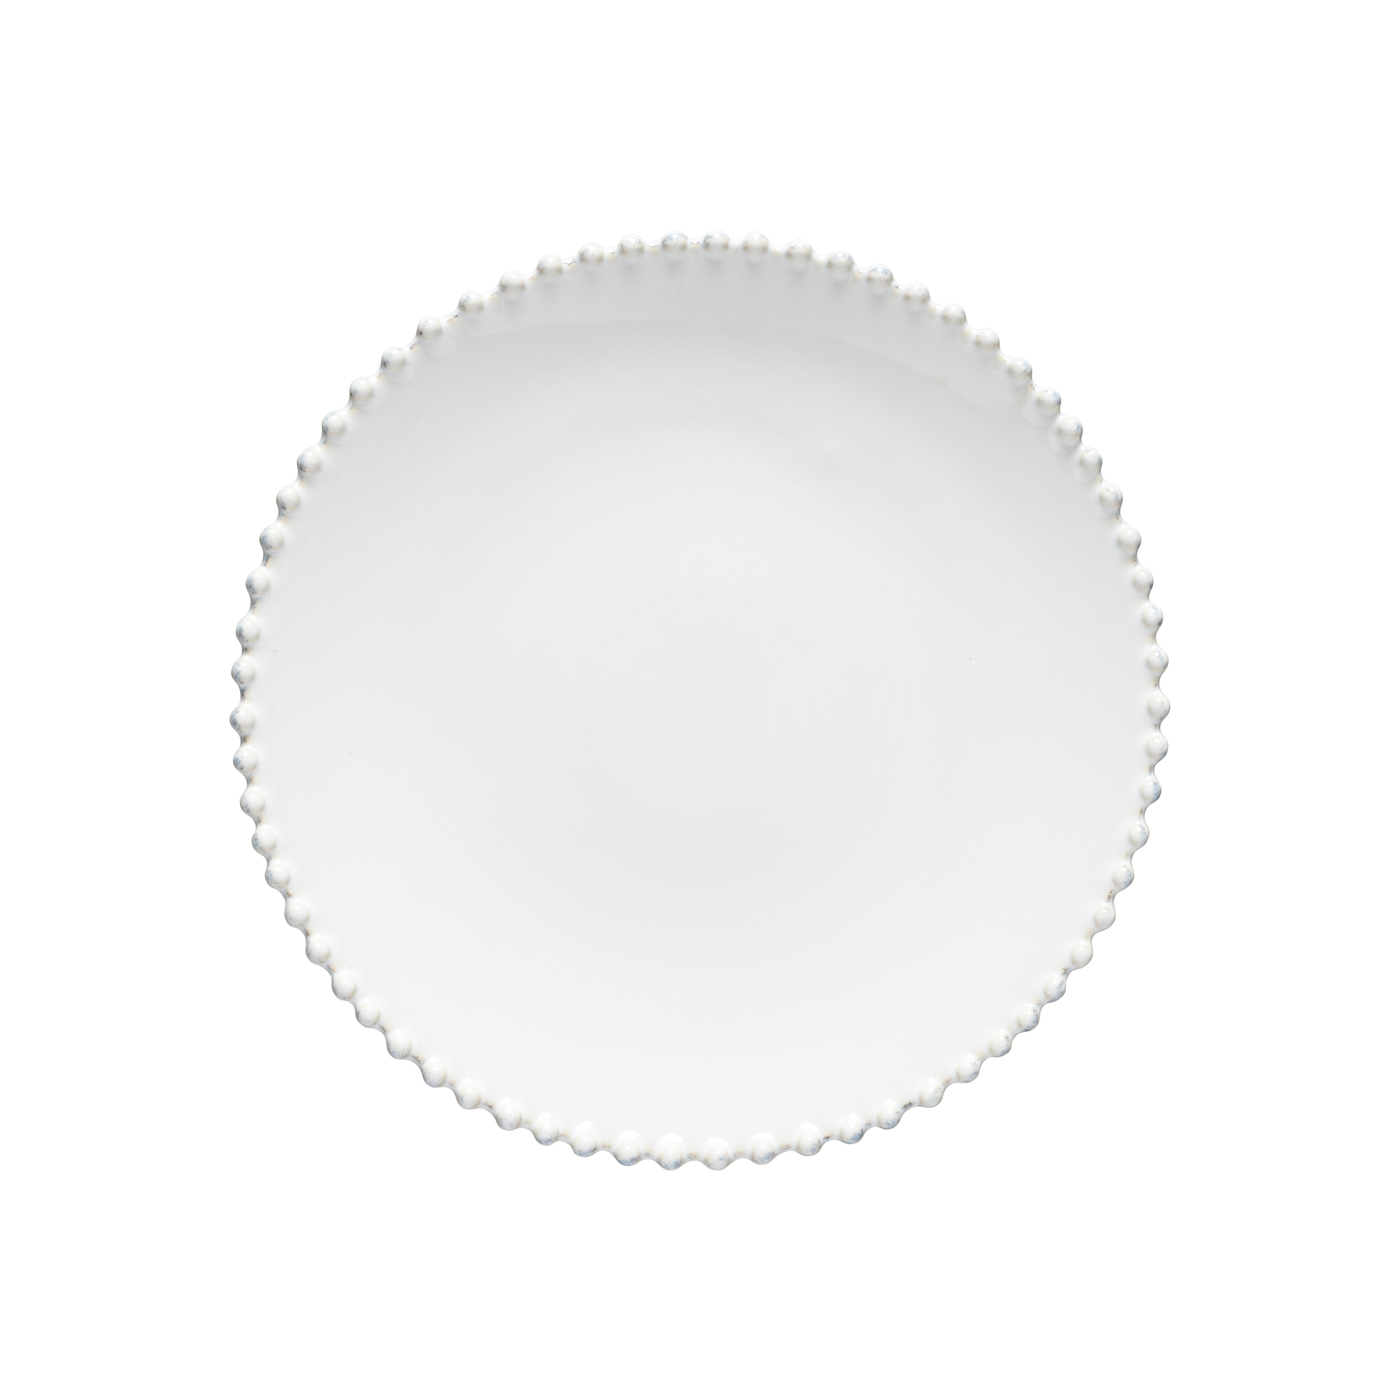 Costa nova white. Тарелка Pearl. Блюдечко белое. Тарелка Вайт треугольная стеклокерамика. White Plate.